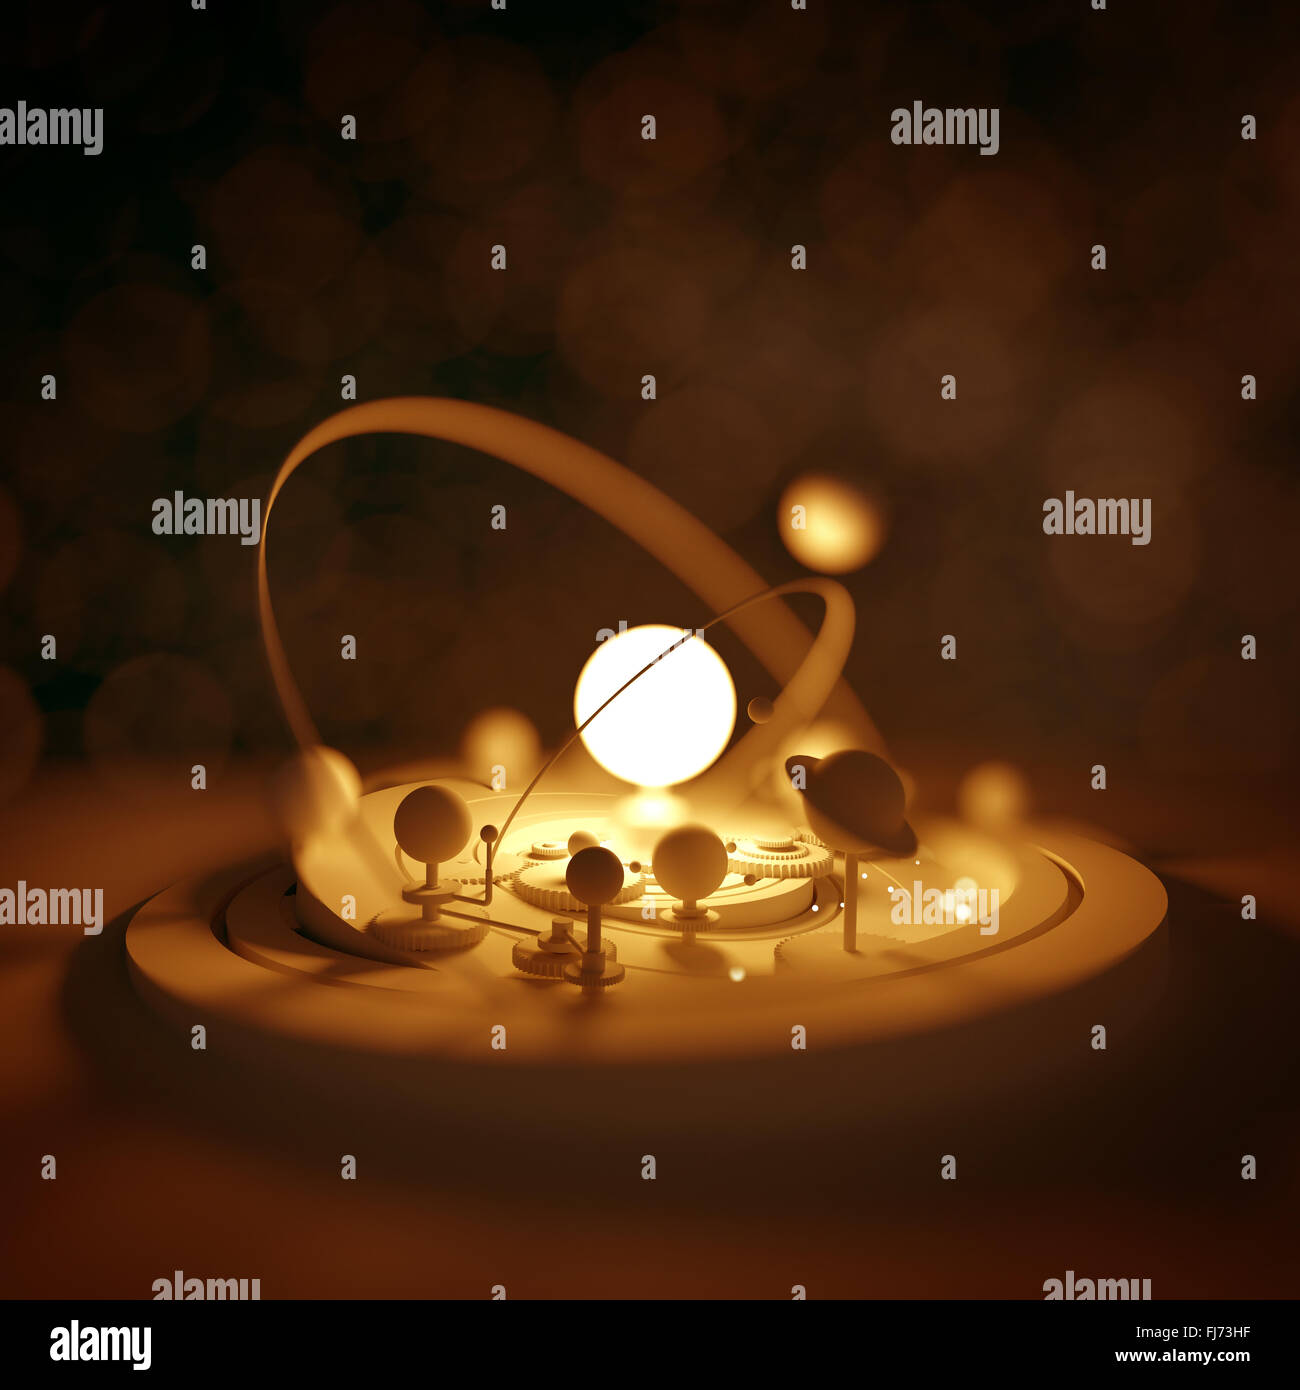 Planetarium Model. Planets and comets orbiting around the sun. Illustration. Stock Photo